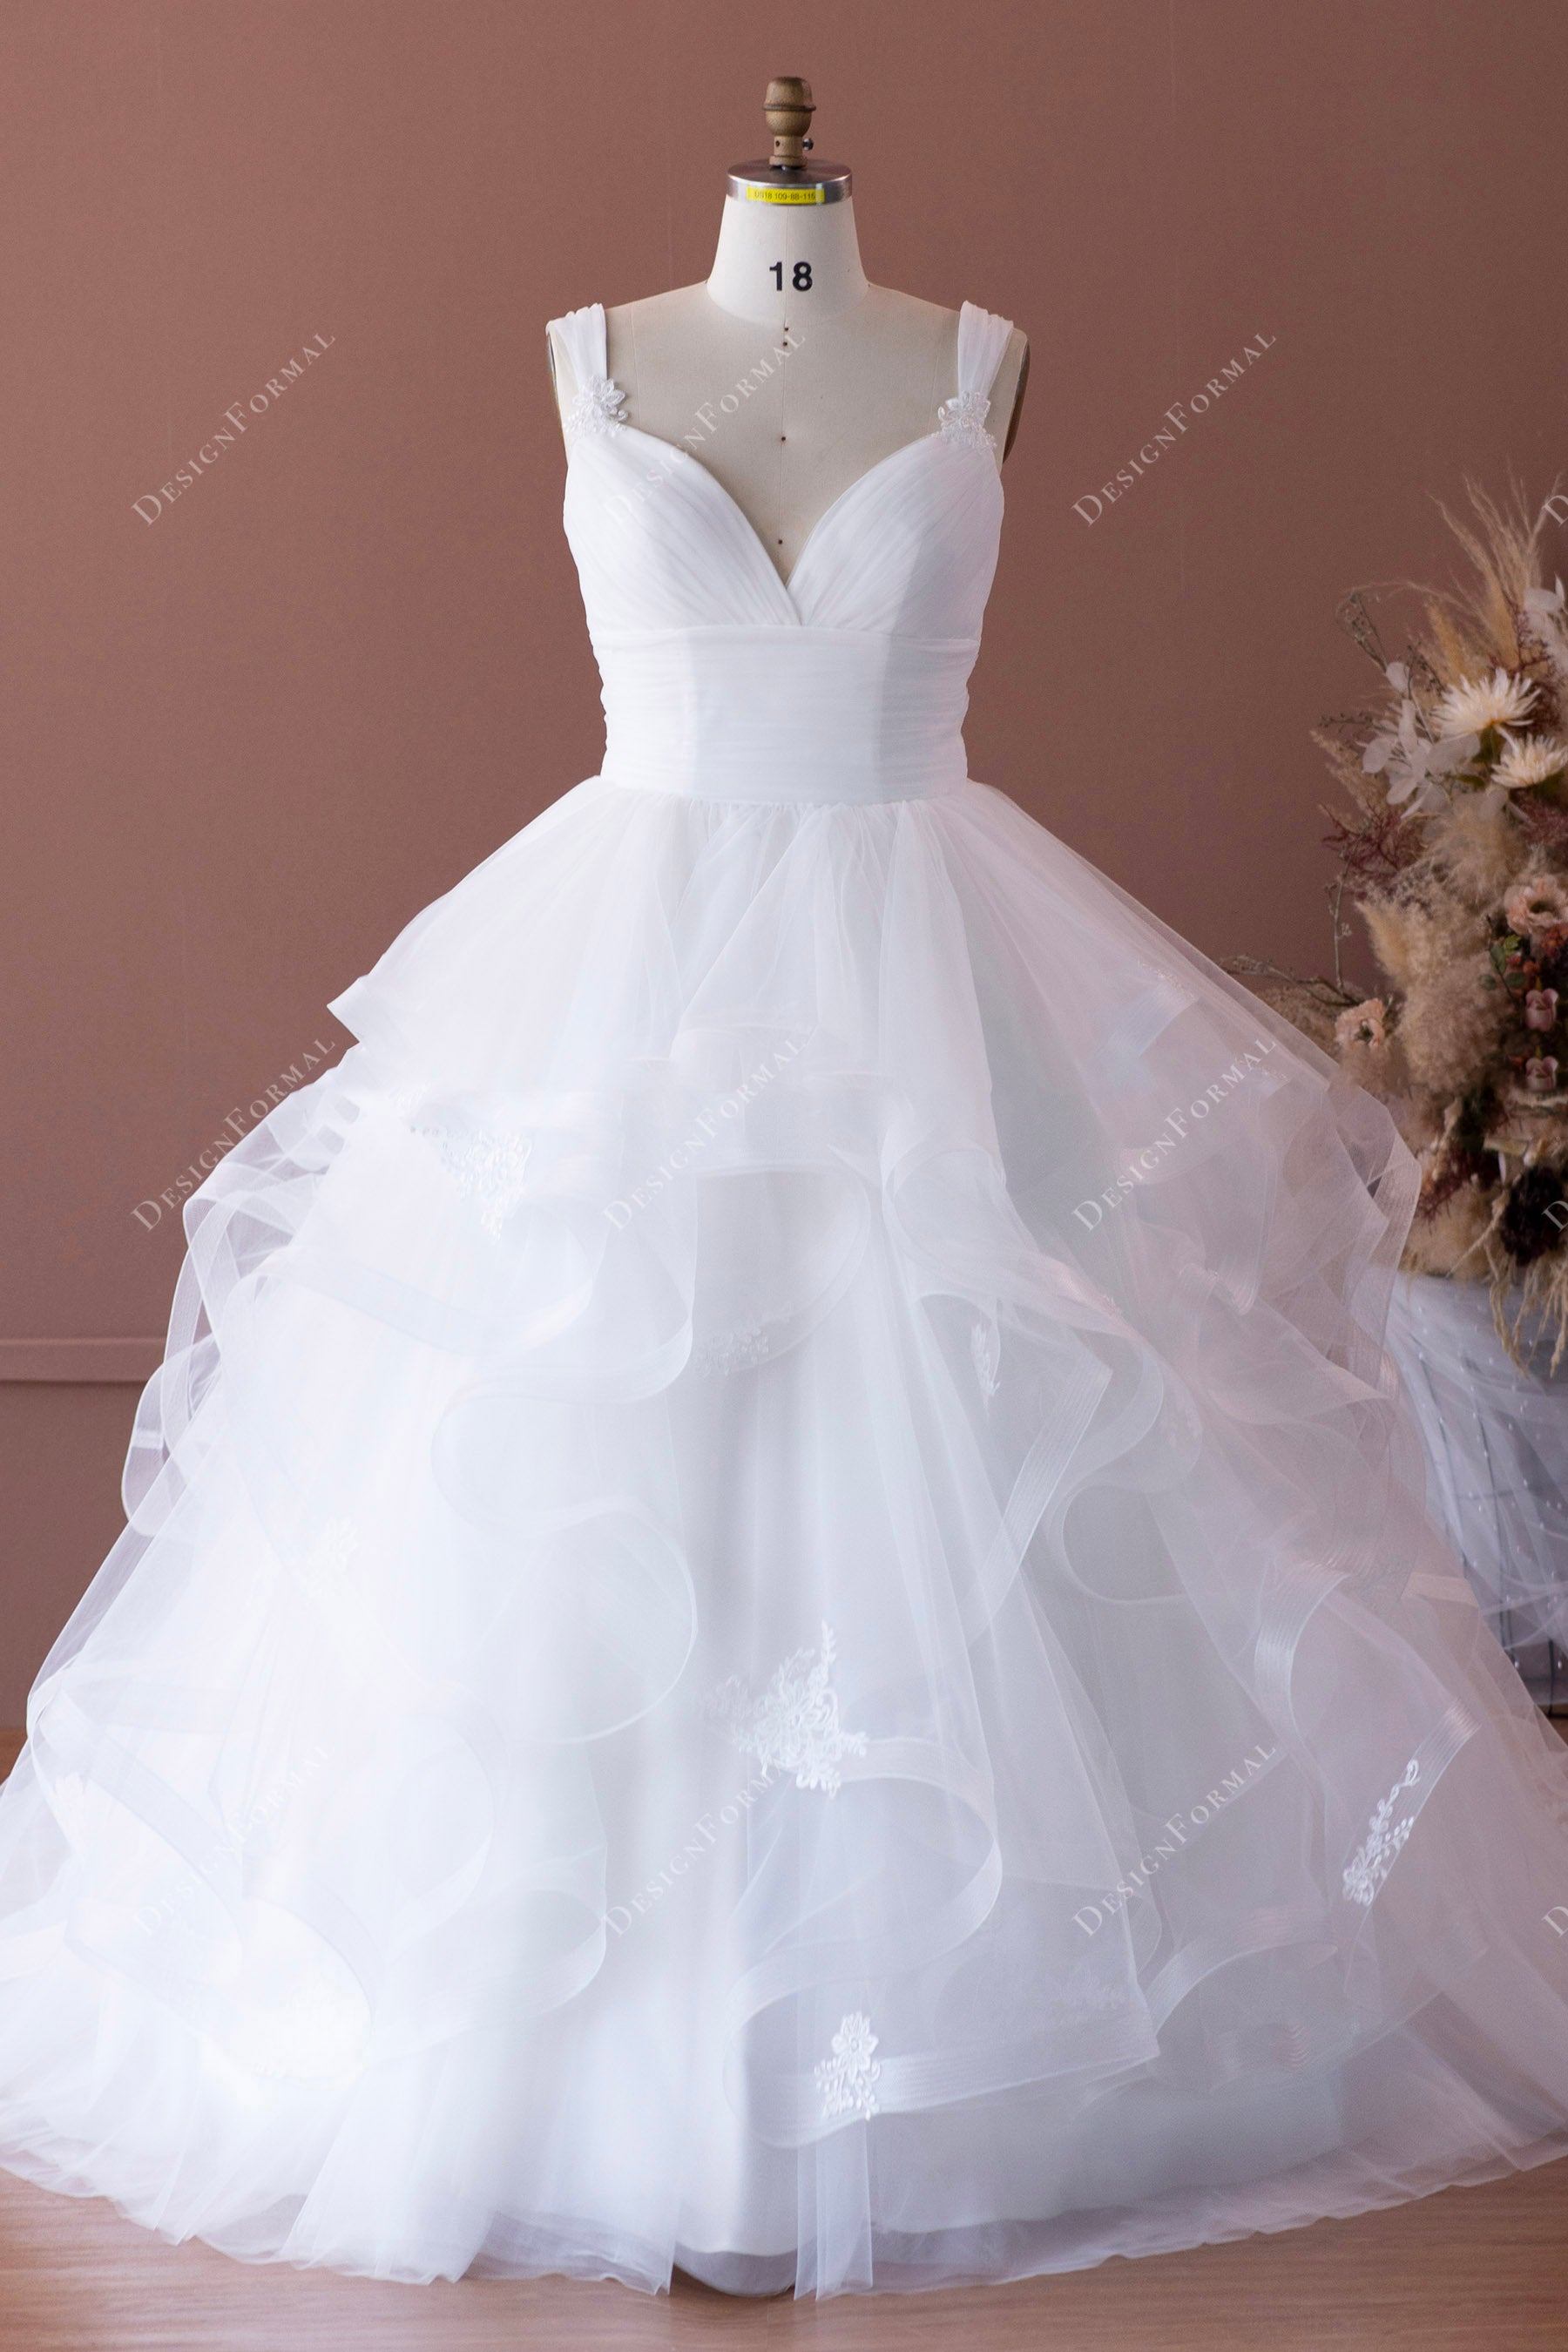 straps sweetheart neck ruffled ballgown wedding dress